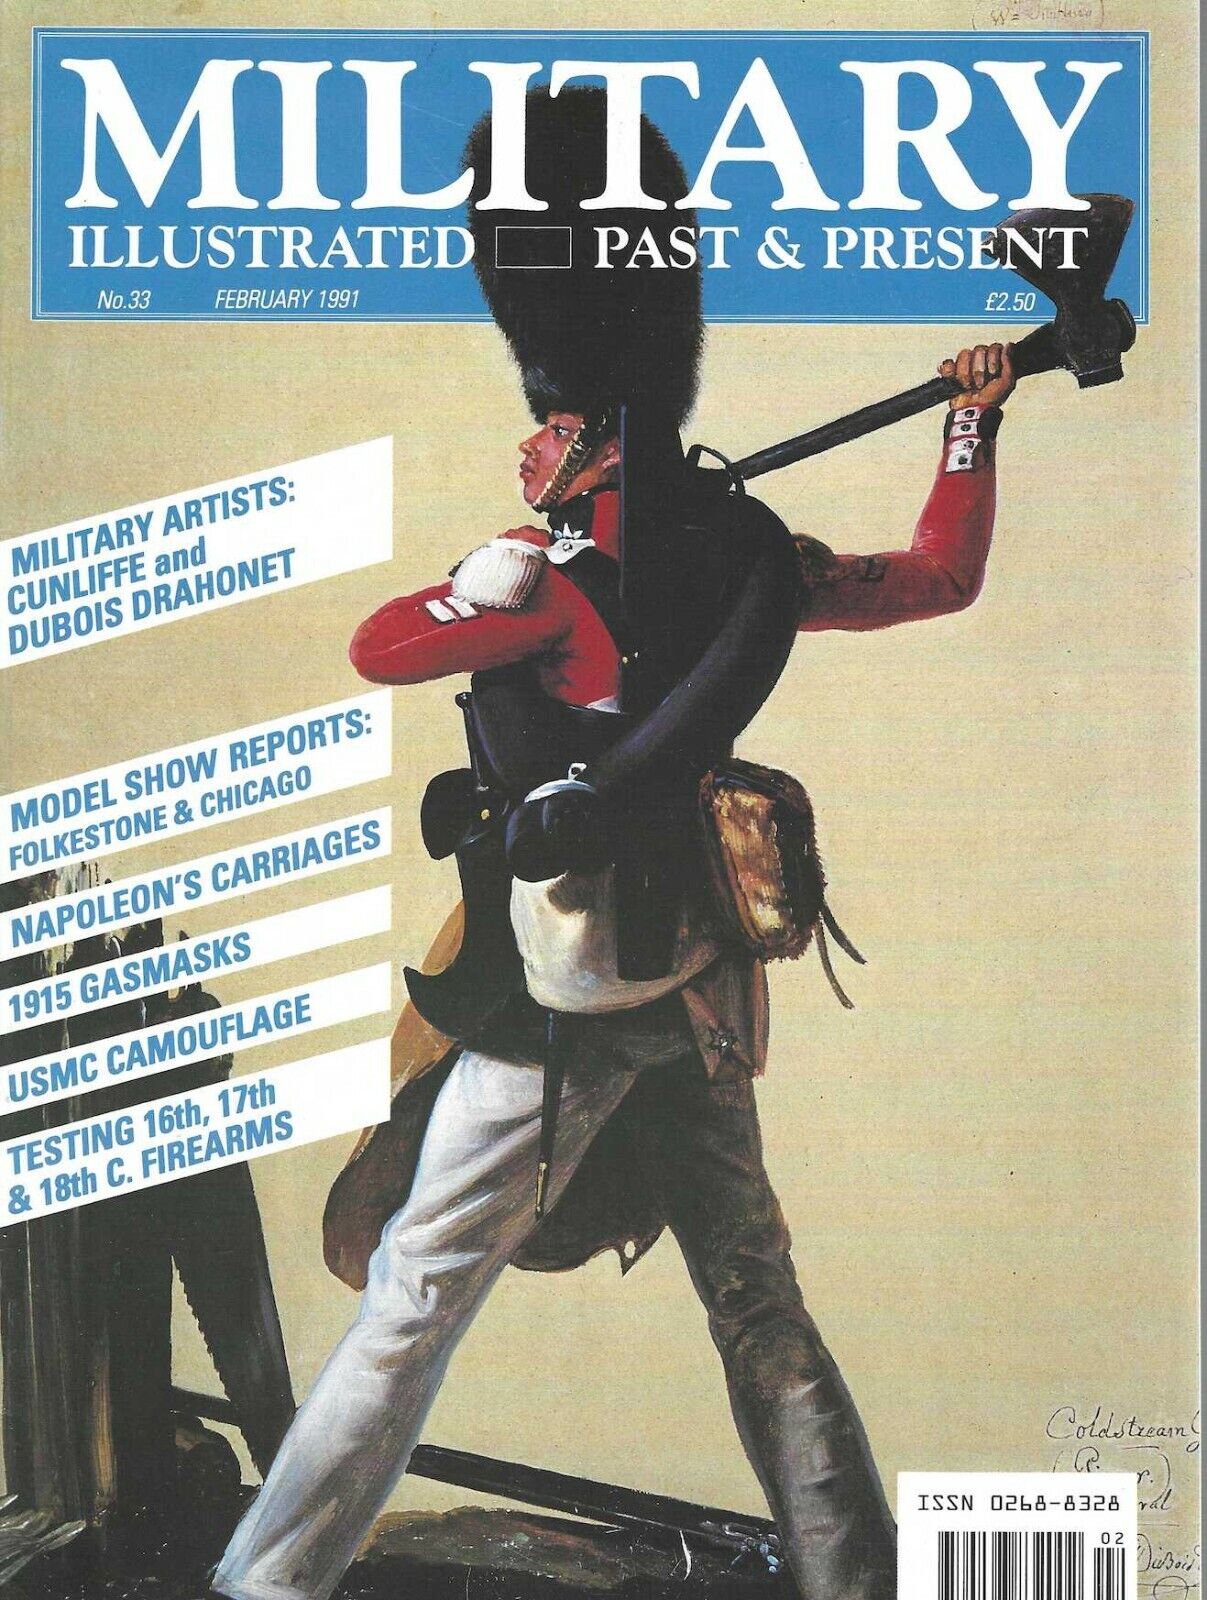 Military Illustrated, Issue #33, February 1991, Military History Magazine